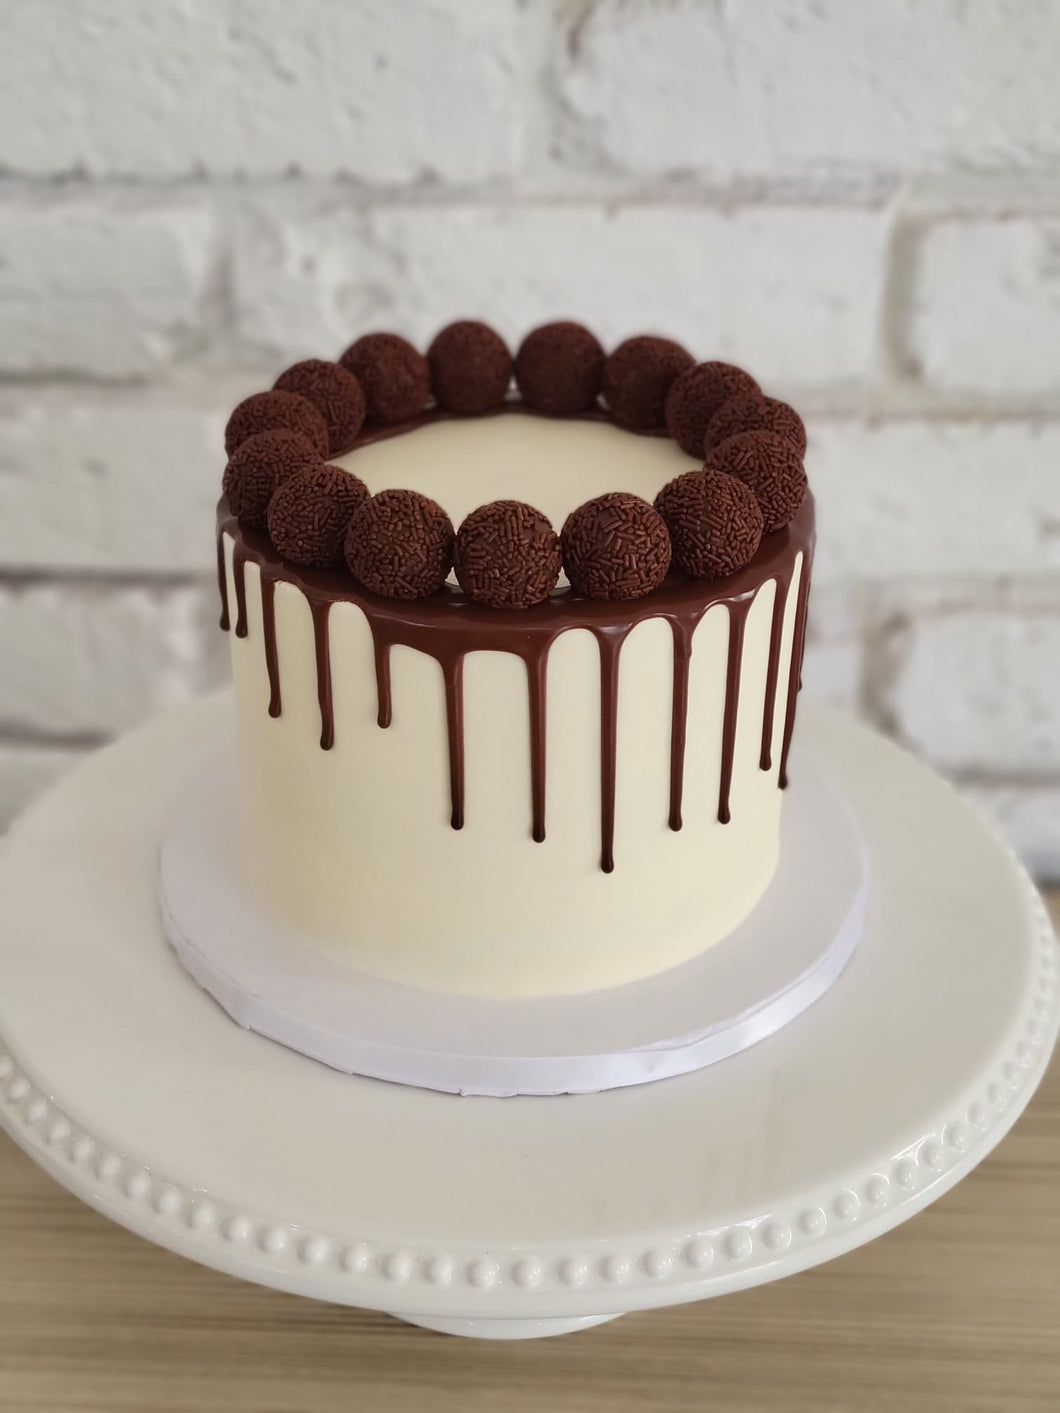 Party Kit Large Chocolate Drip Cake :) - Serves 35